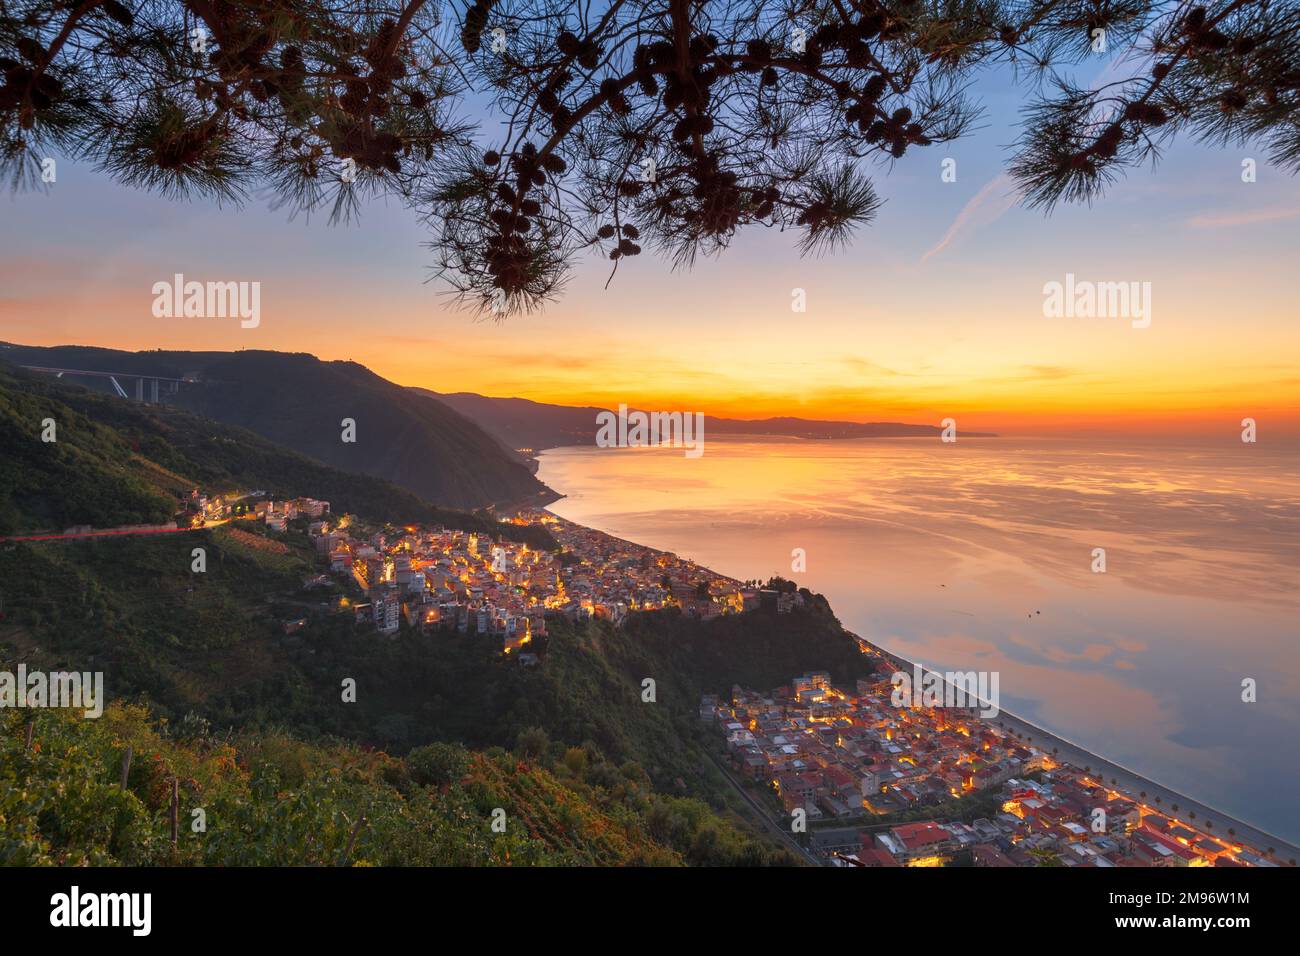 Bagnara Calabra, Italy cityscape overlooking the Tyrrhenian Sea. Stock Photo